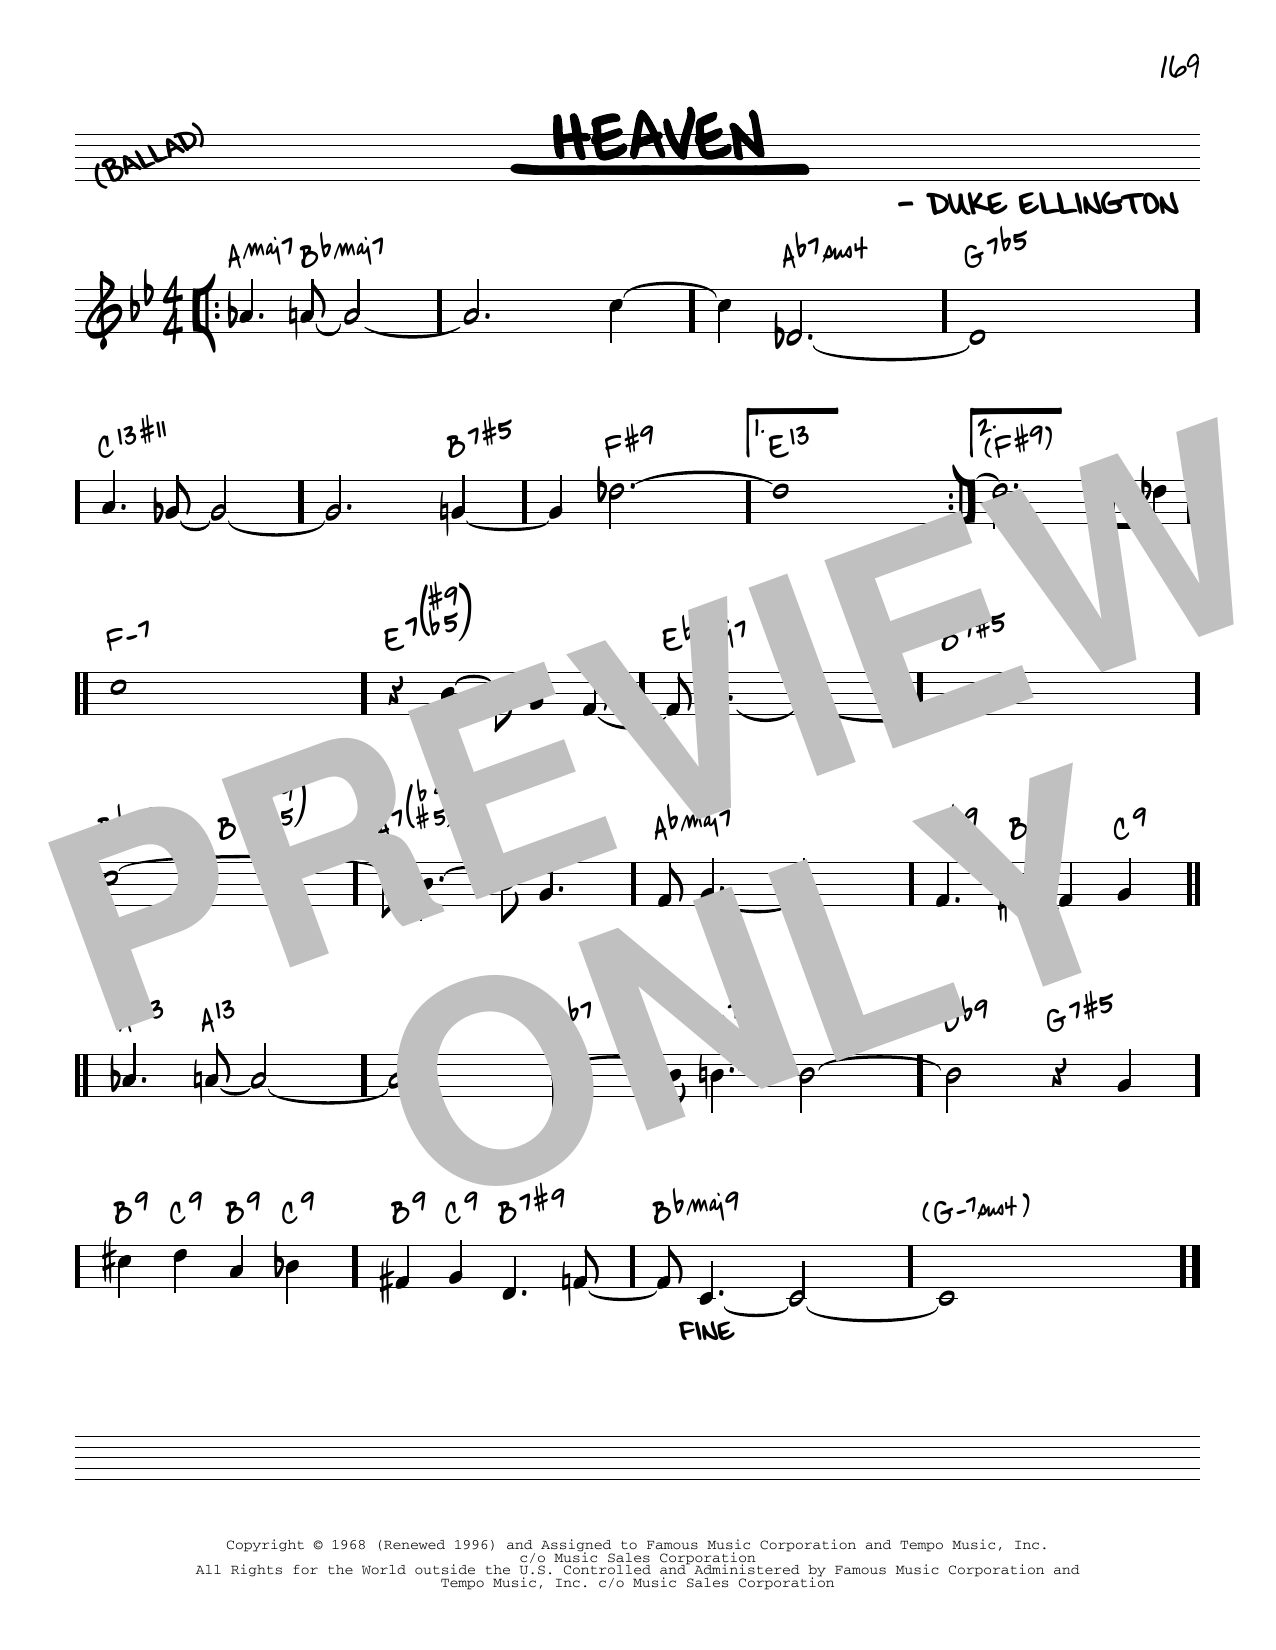 Duke Ellington Heaven [Reharmonized version] (arr. Jack Grassel) Sheet Music Notes & Chords for Real Book – Melody & Chords - Download or Print PDF